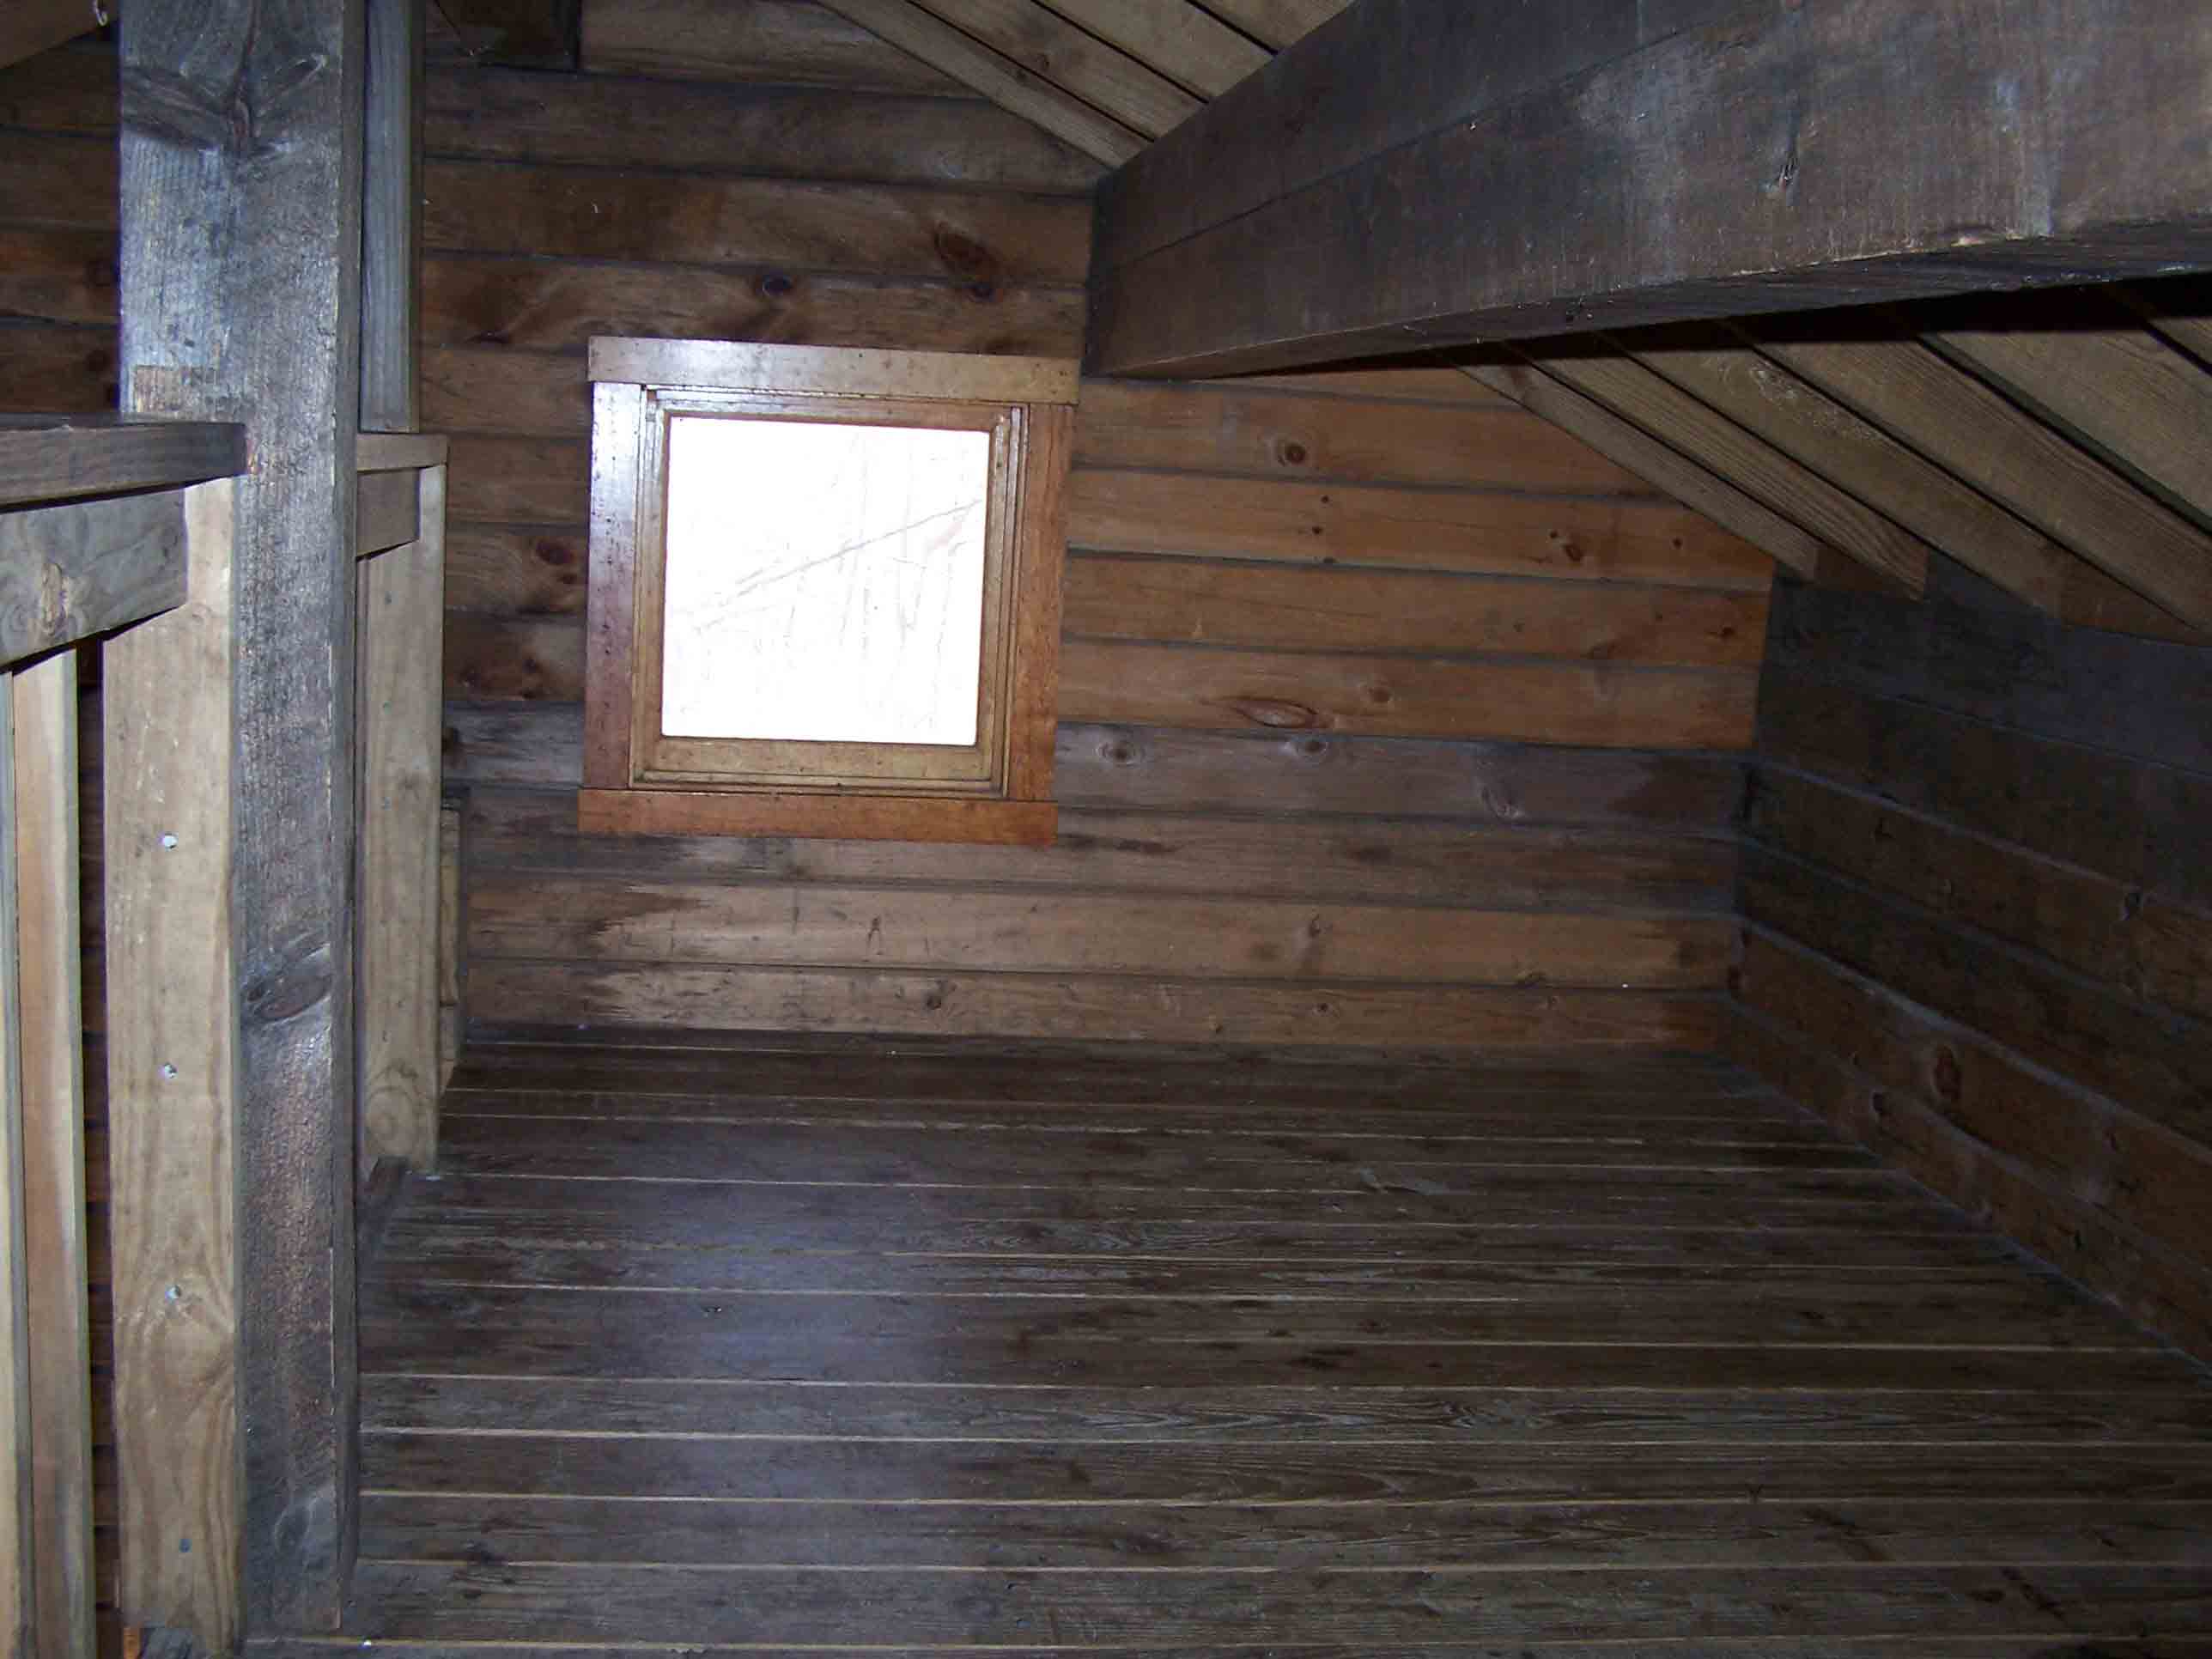 mm 13.4 - William Penn Shelter loft. Courtesy at@rohland.org